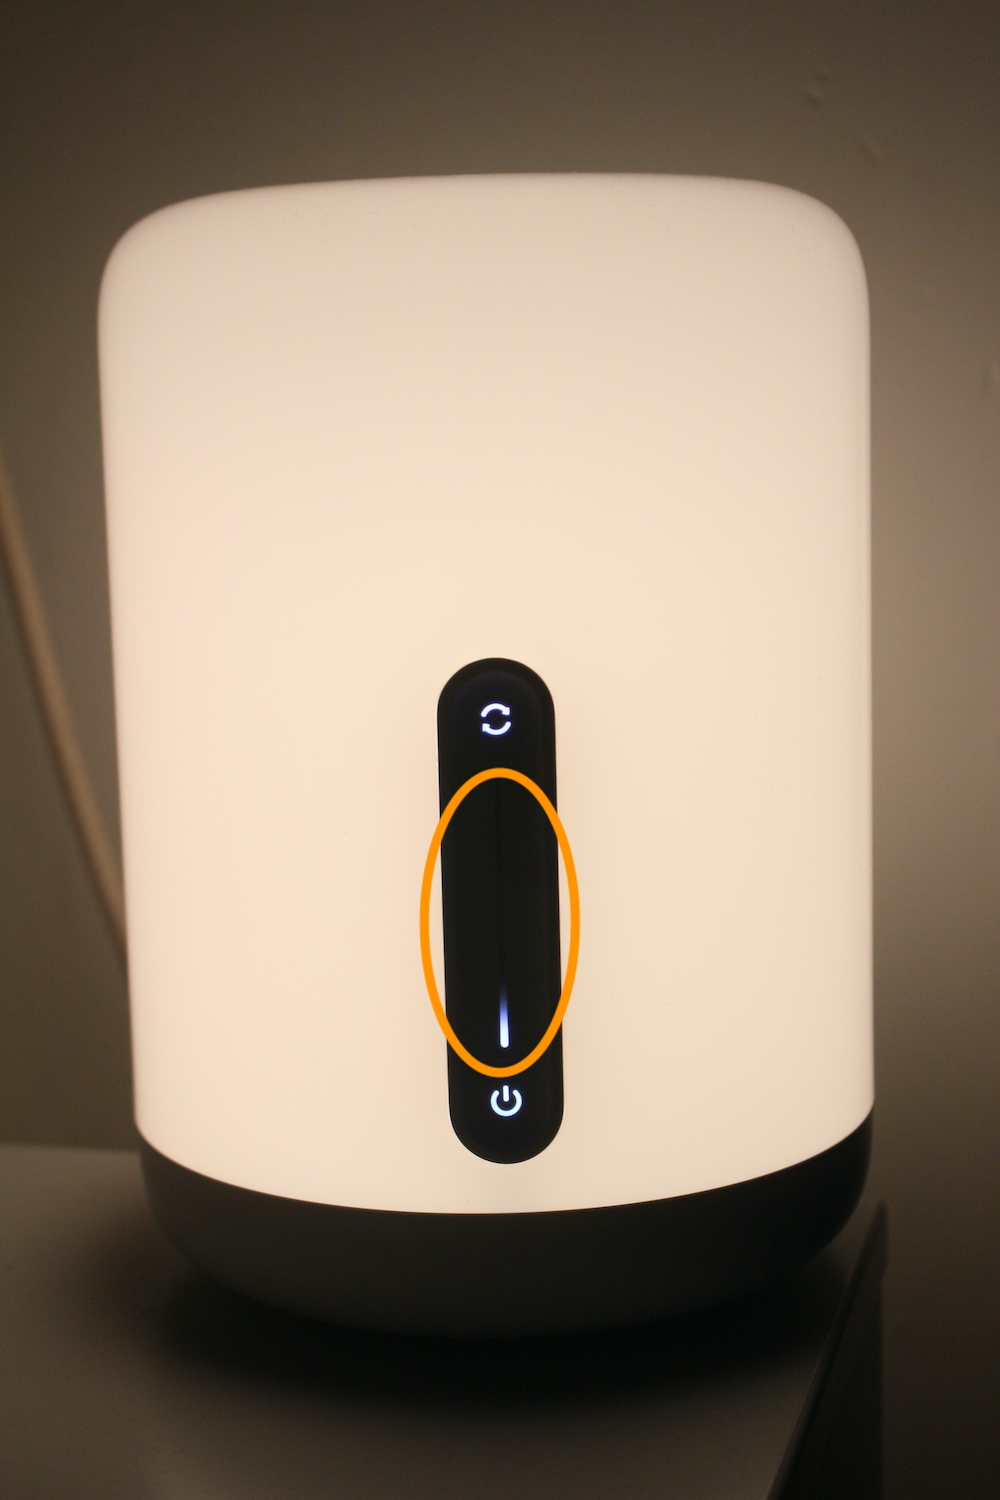 Front of the Xiaomi Mijia Bedside Lamp 2, brightness slider